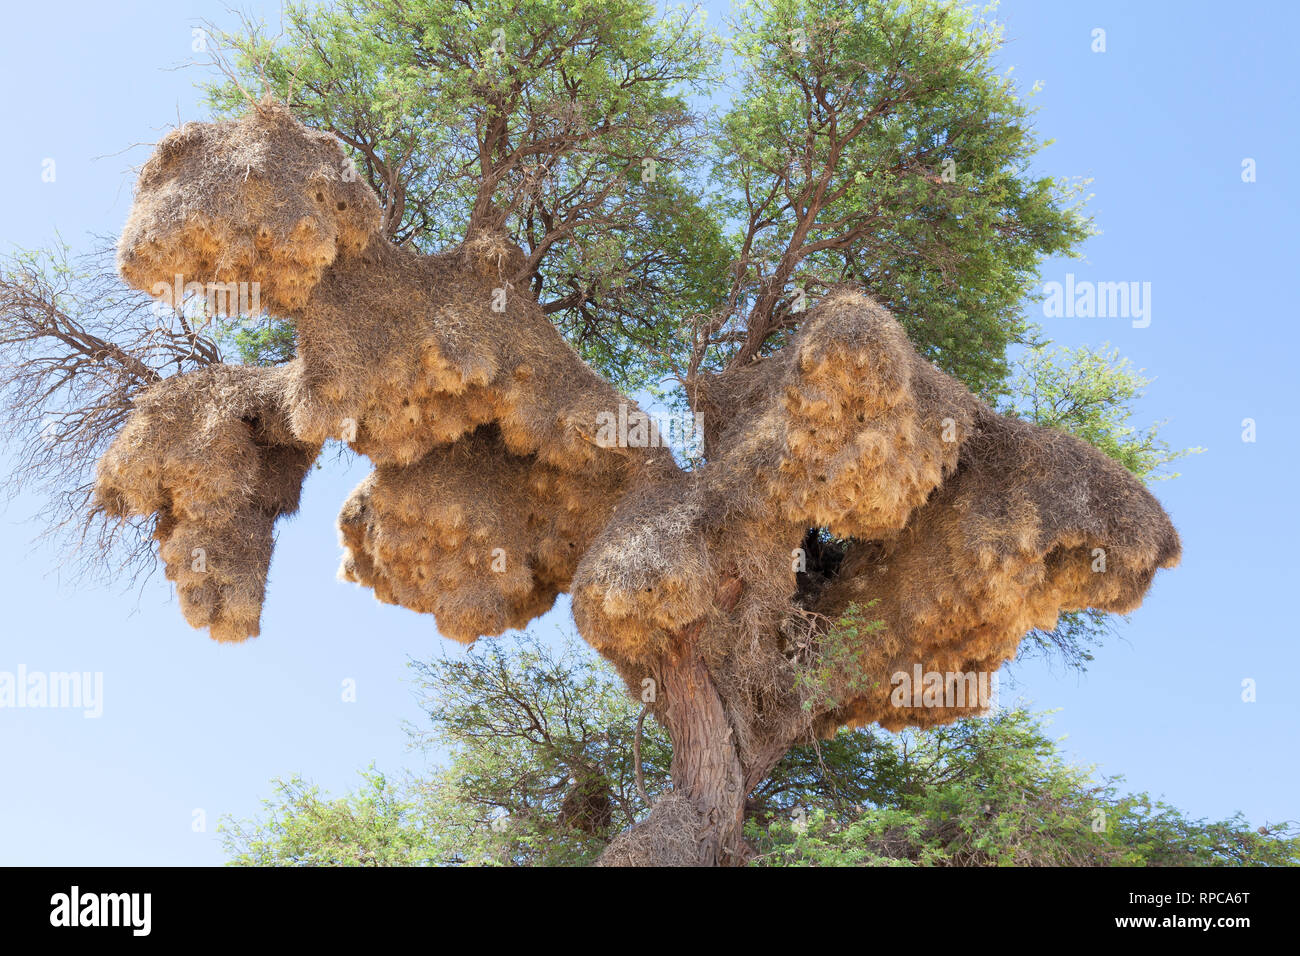 Große gemeinsame Nest der Sociable Weaver, Philetairus socius, in der Camel Thorn Tree, Vachellia erioloba, Kgalagadi Transfrontier Park, Northern Cape, Stockfoto